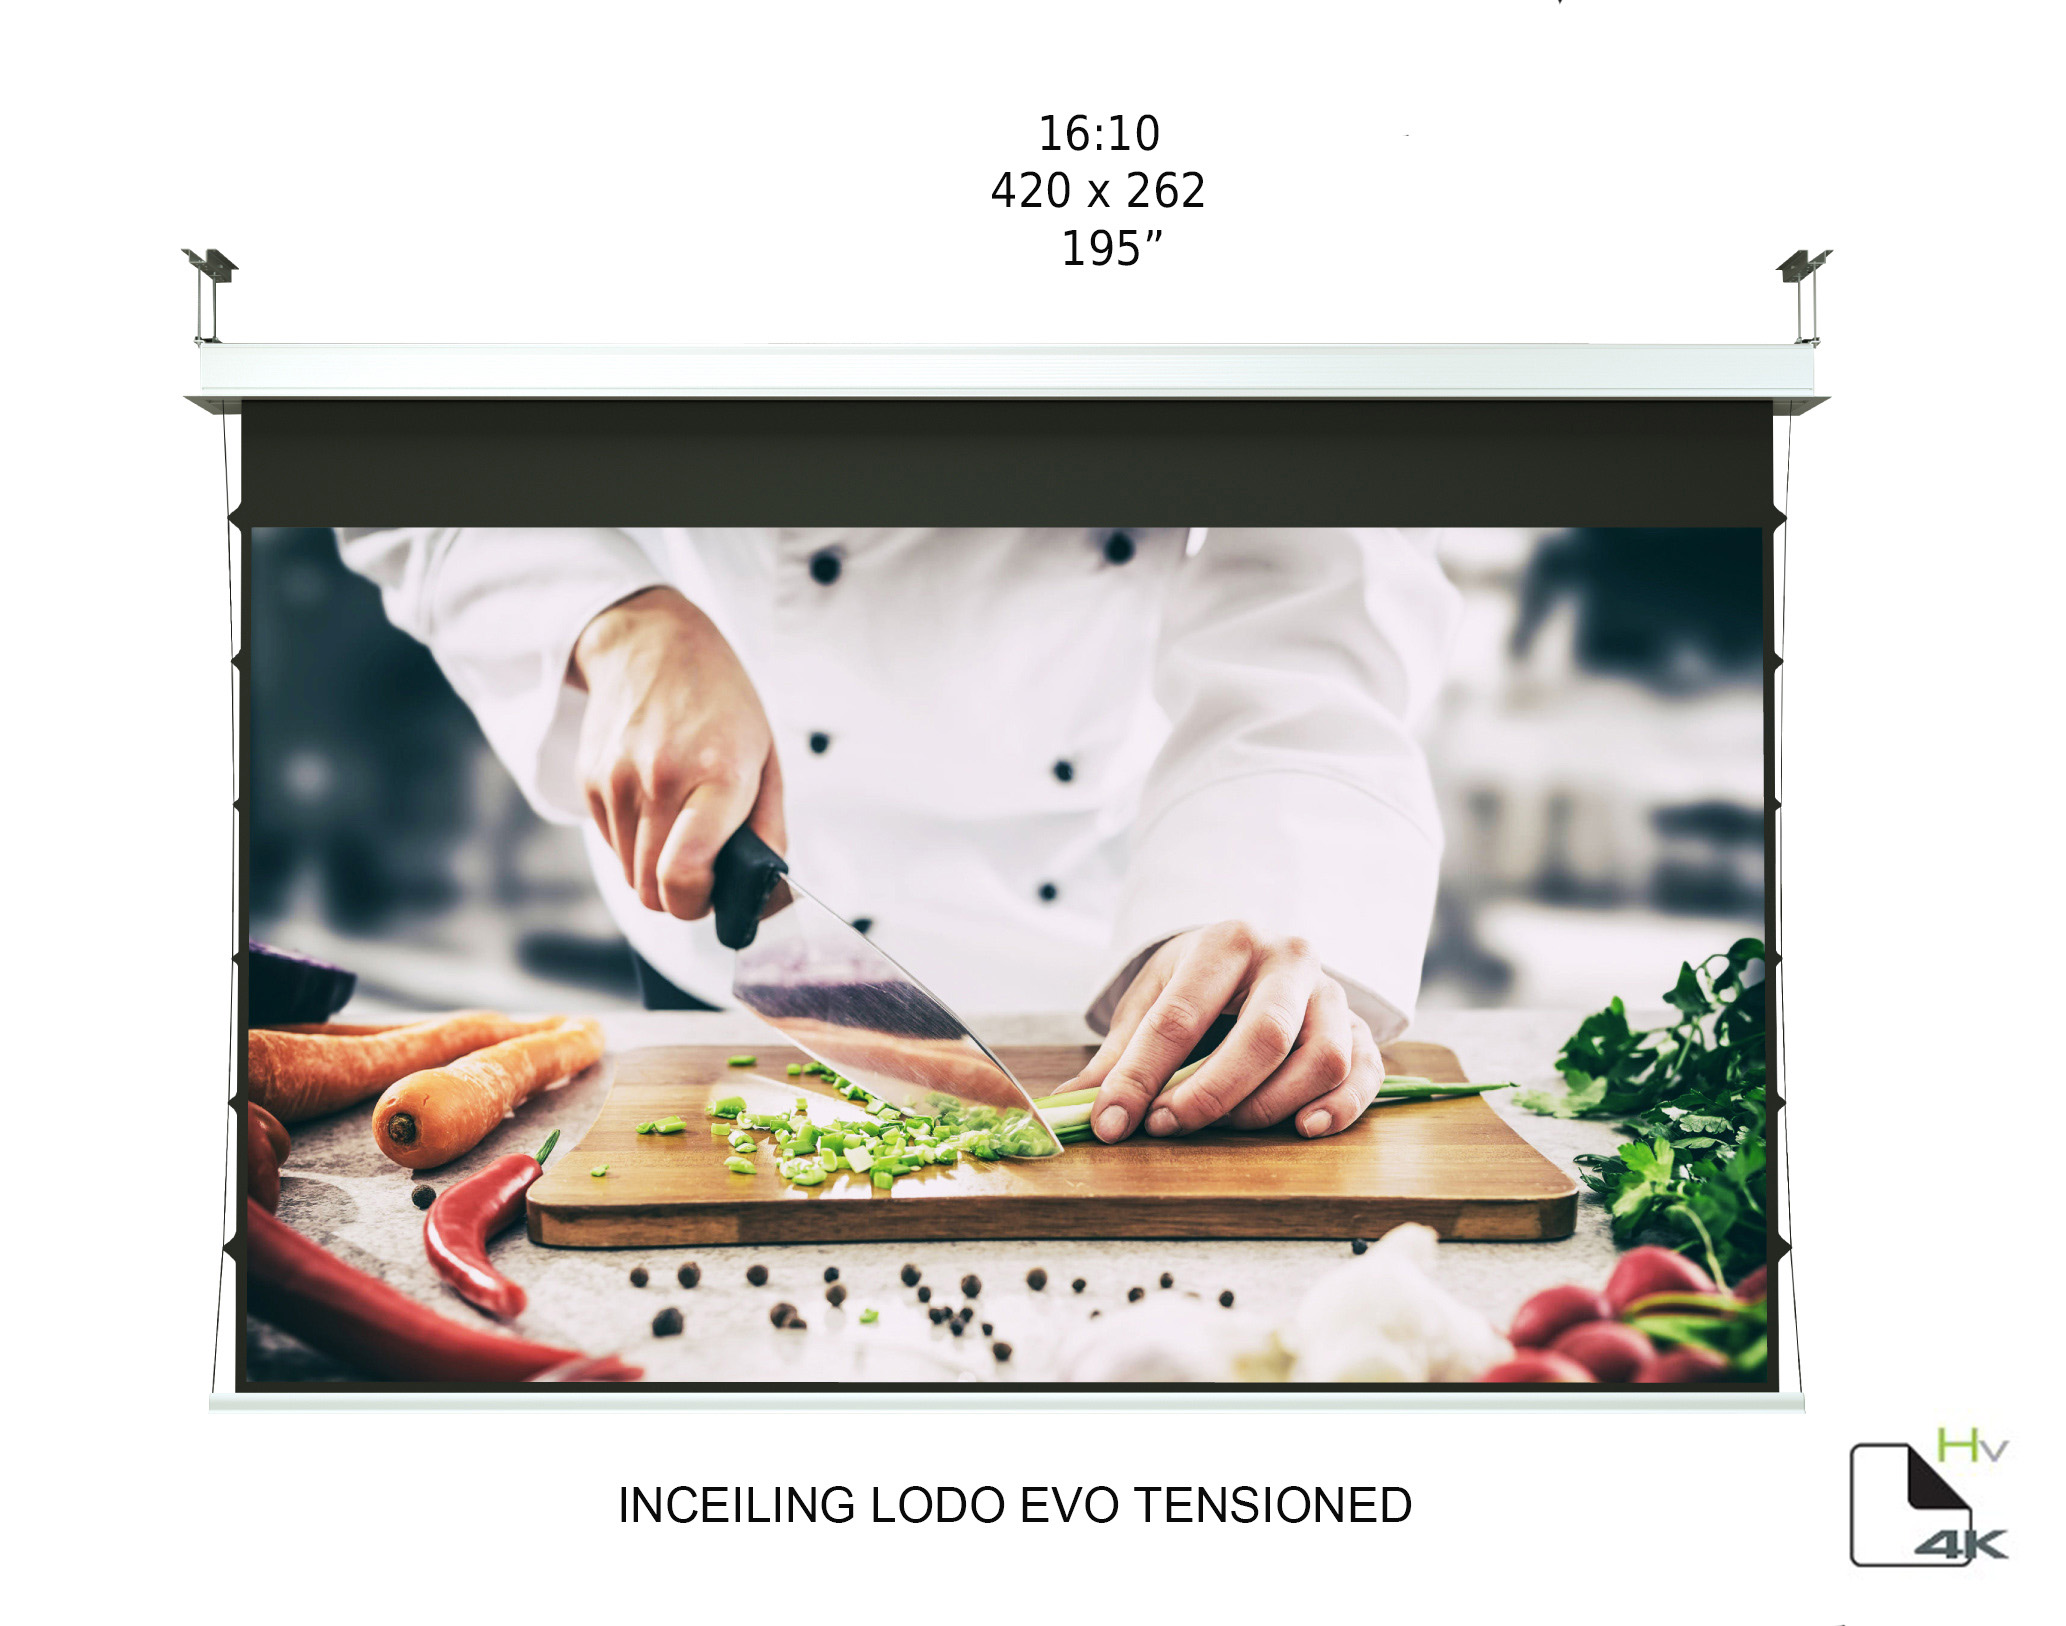 Ecran proiectie motorizat Screenline INCEILING LODO EVO TENS Home Vision,420x262(195”),16:10, alb, comutator perete